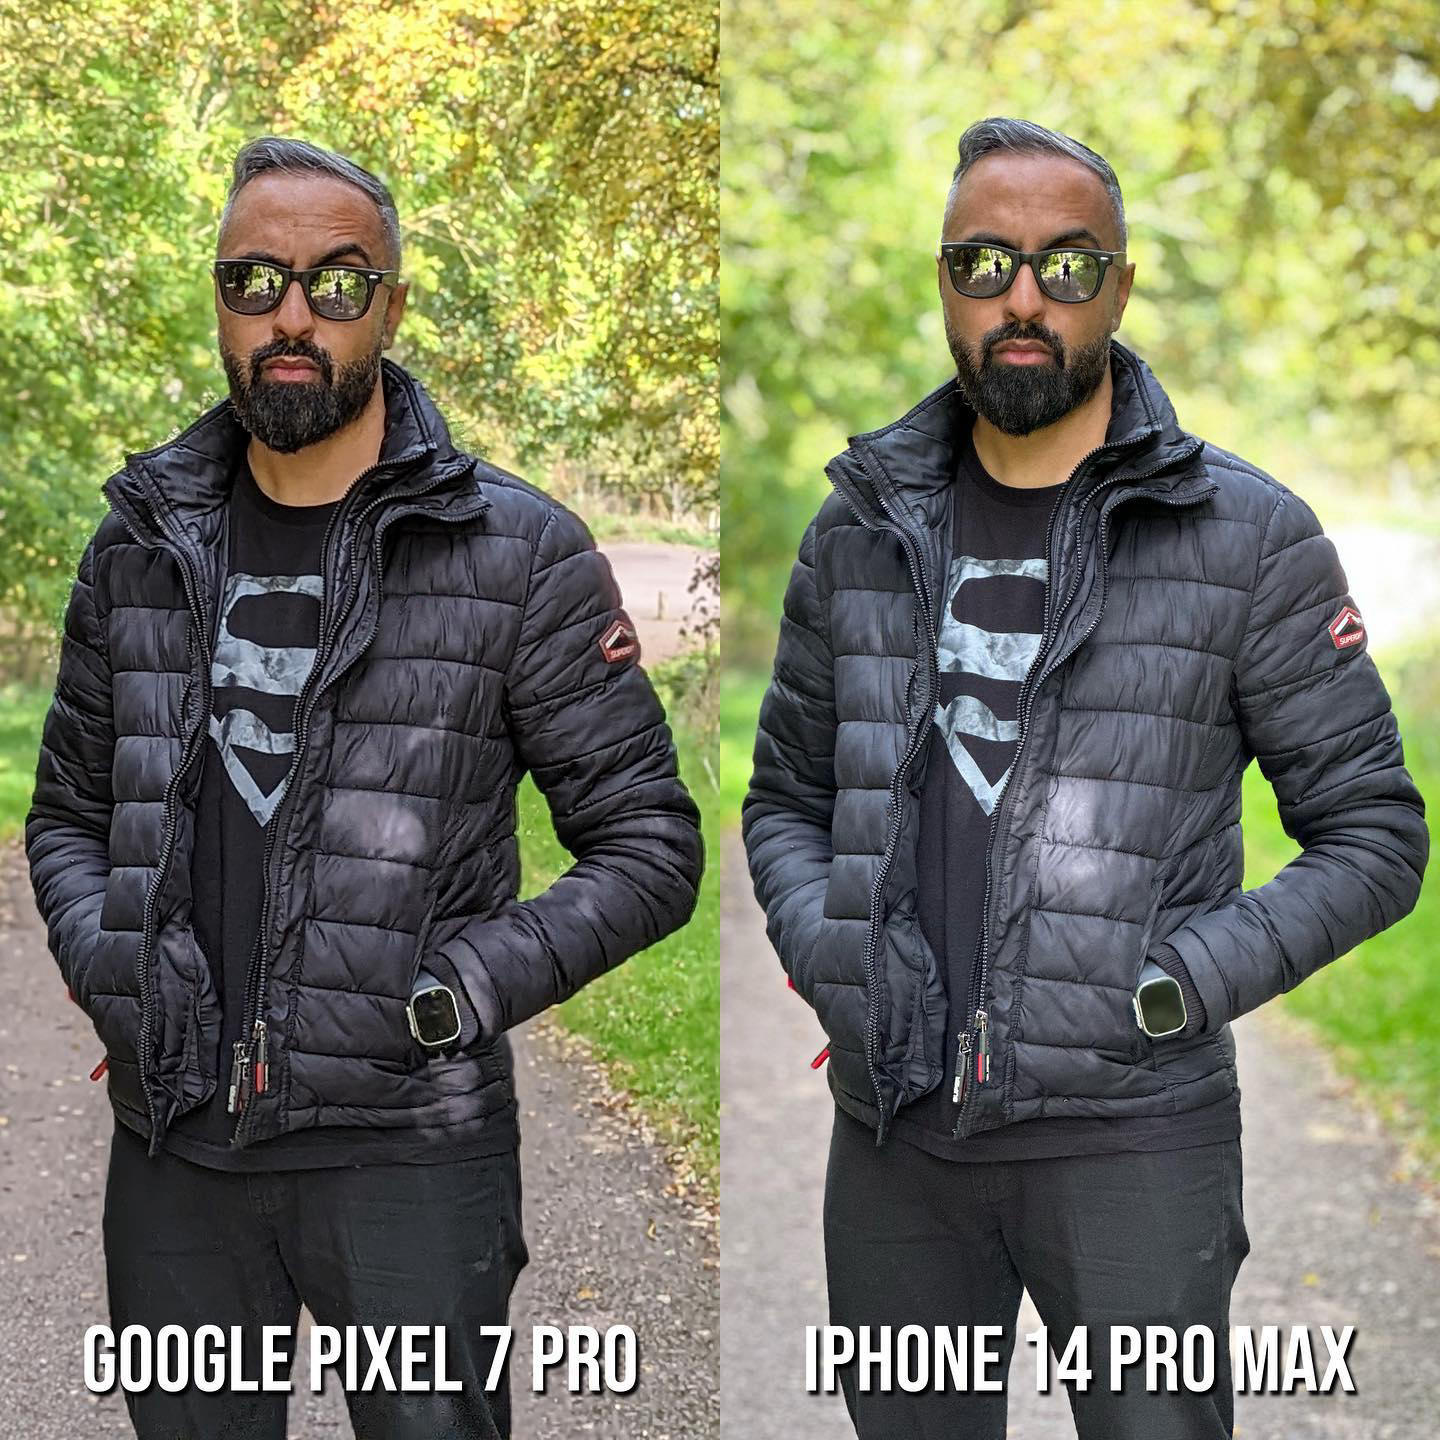 SuperSaf - Google Pixel 7 Pro or iPhone 14 Pro Max